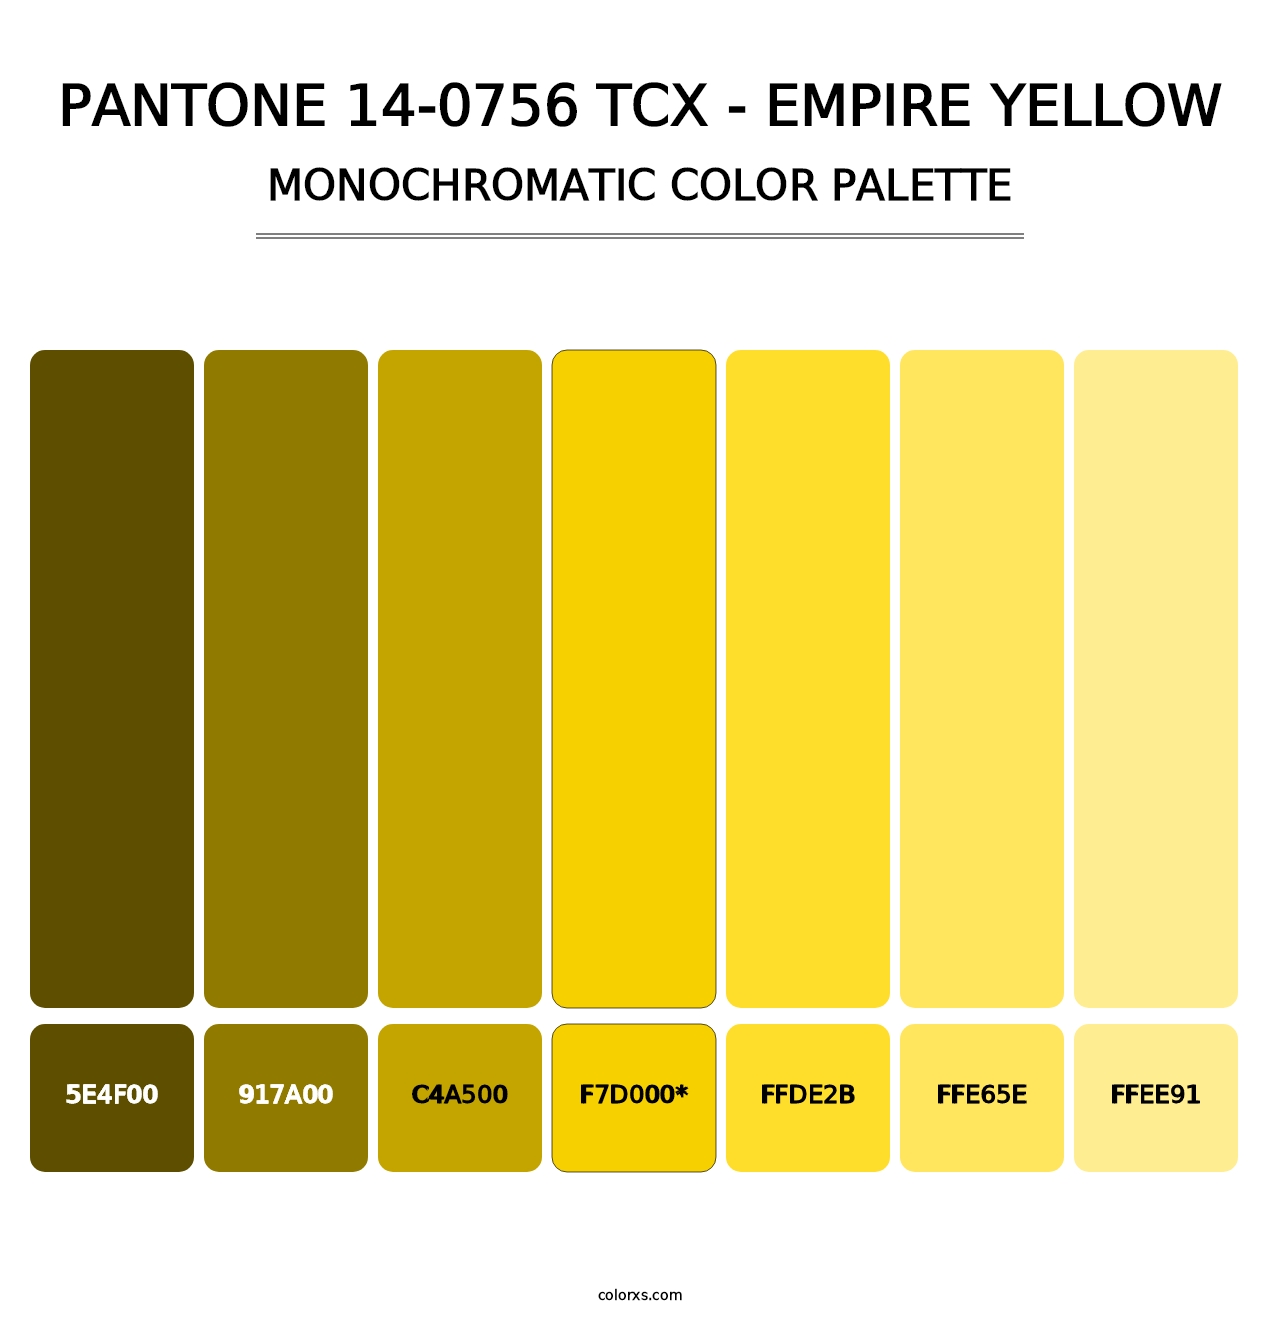 PANTONE 14-0756 TCX - Empire Yellow - Monochromatic Color Palette